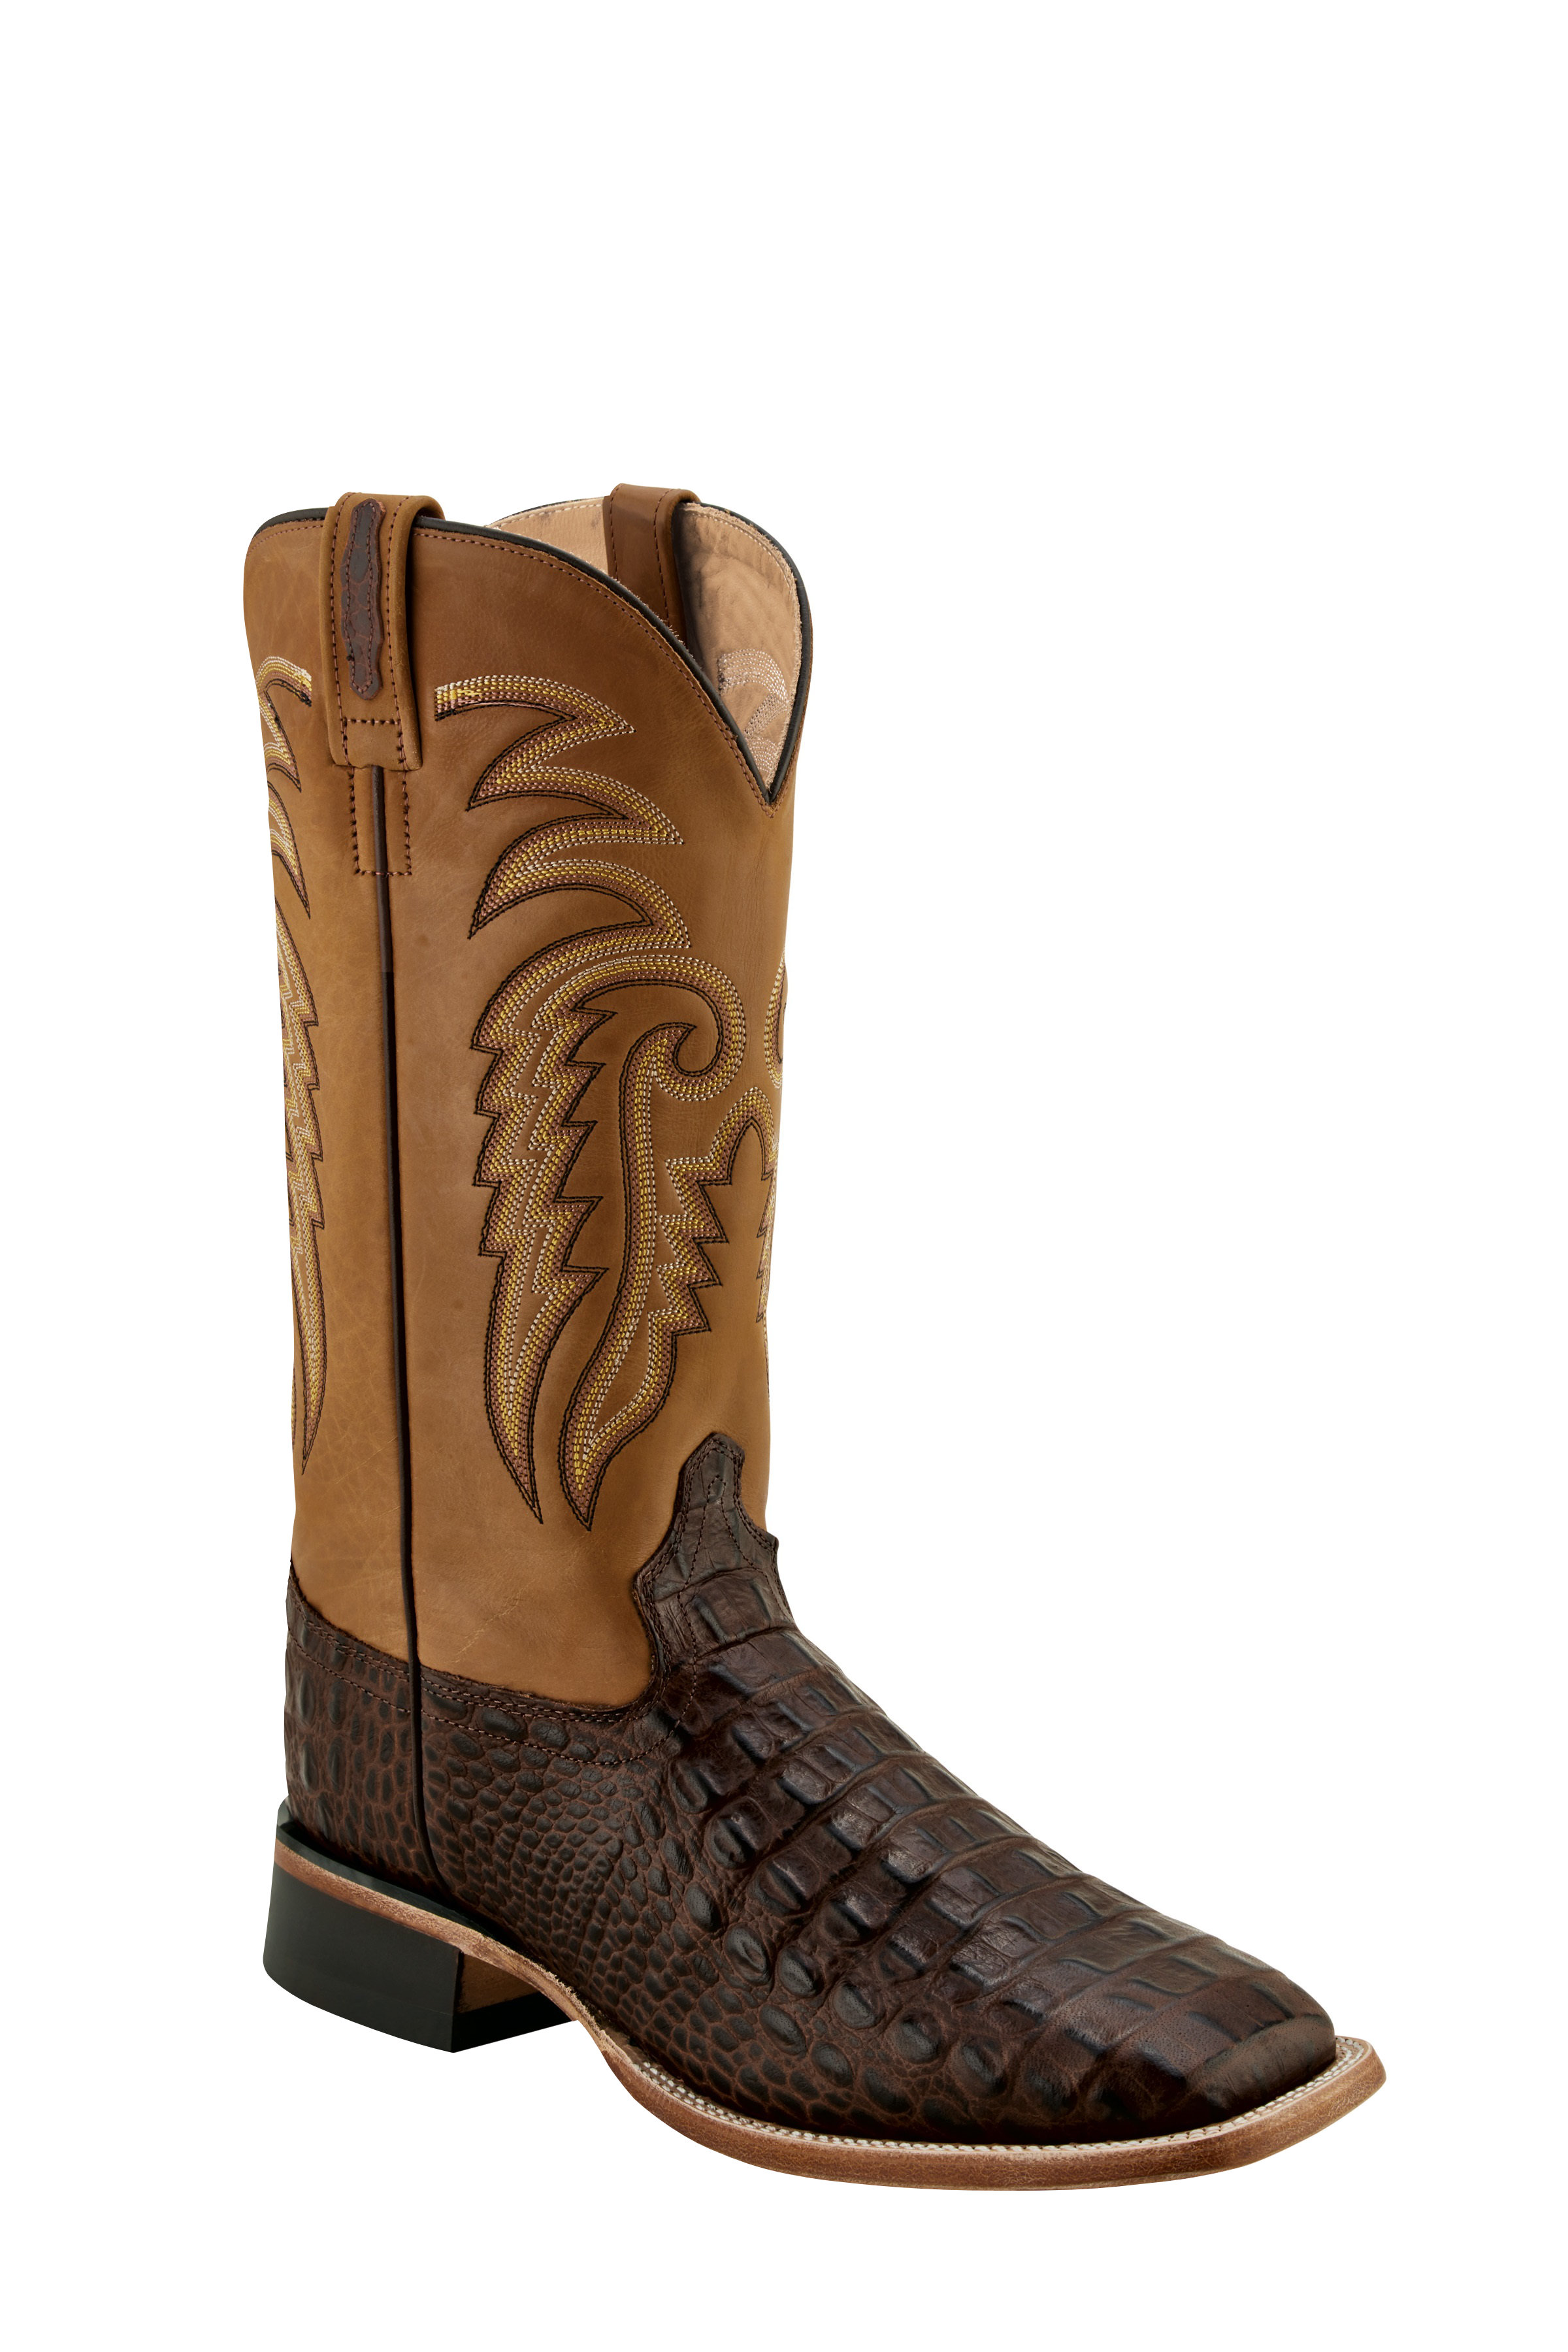 Men's cowboy boots BSM1886, brown-toffee